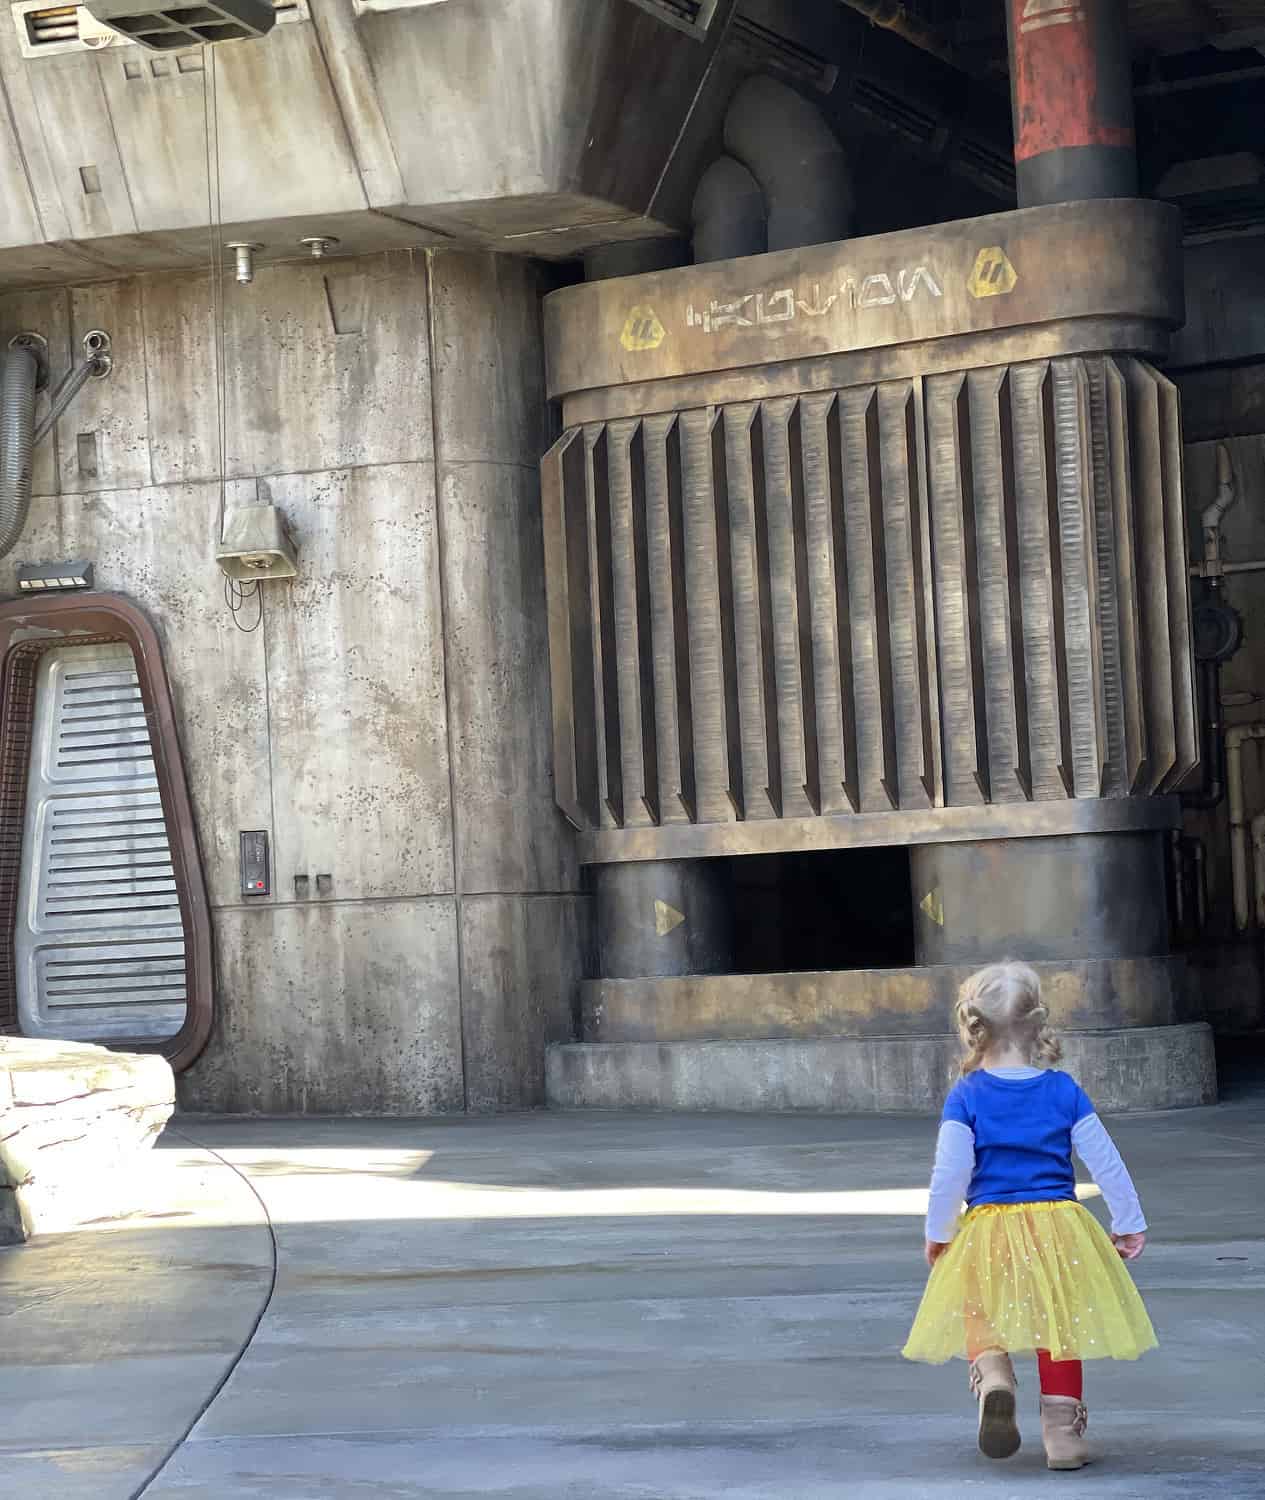 Toddler Star Wars Galaxy Edge Disneyland Park | ROAD TRIP: Tucson to Disneyland